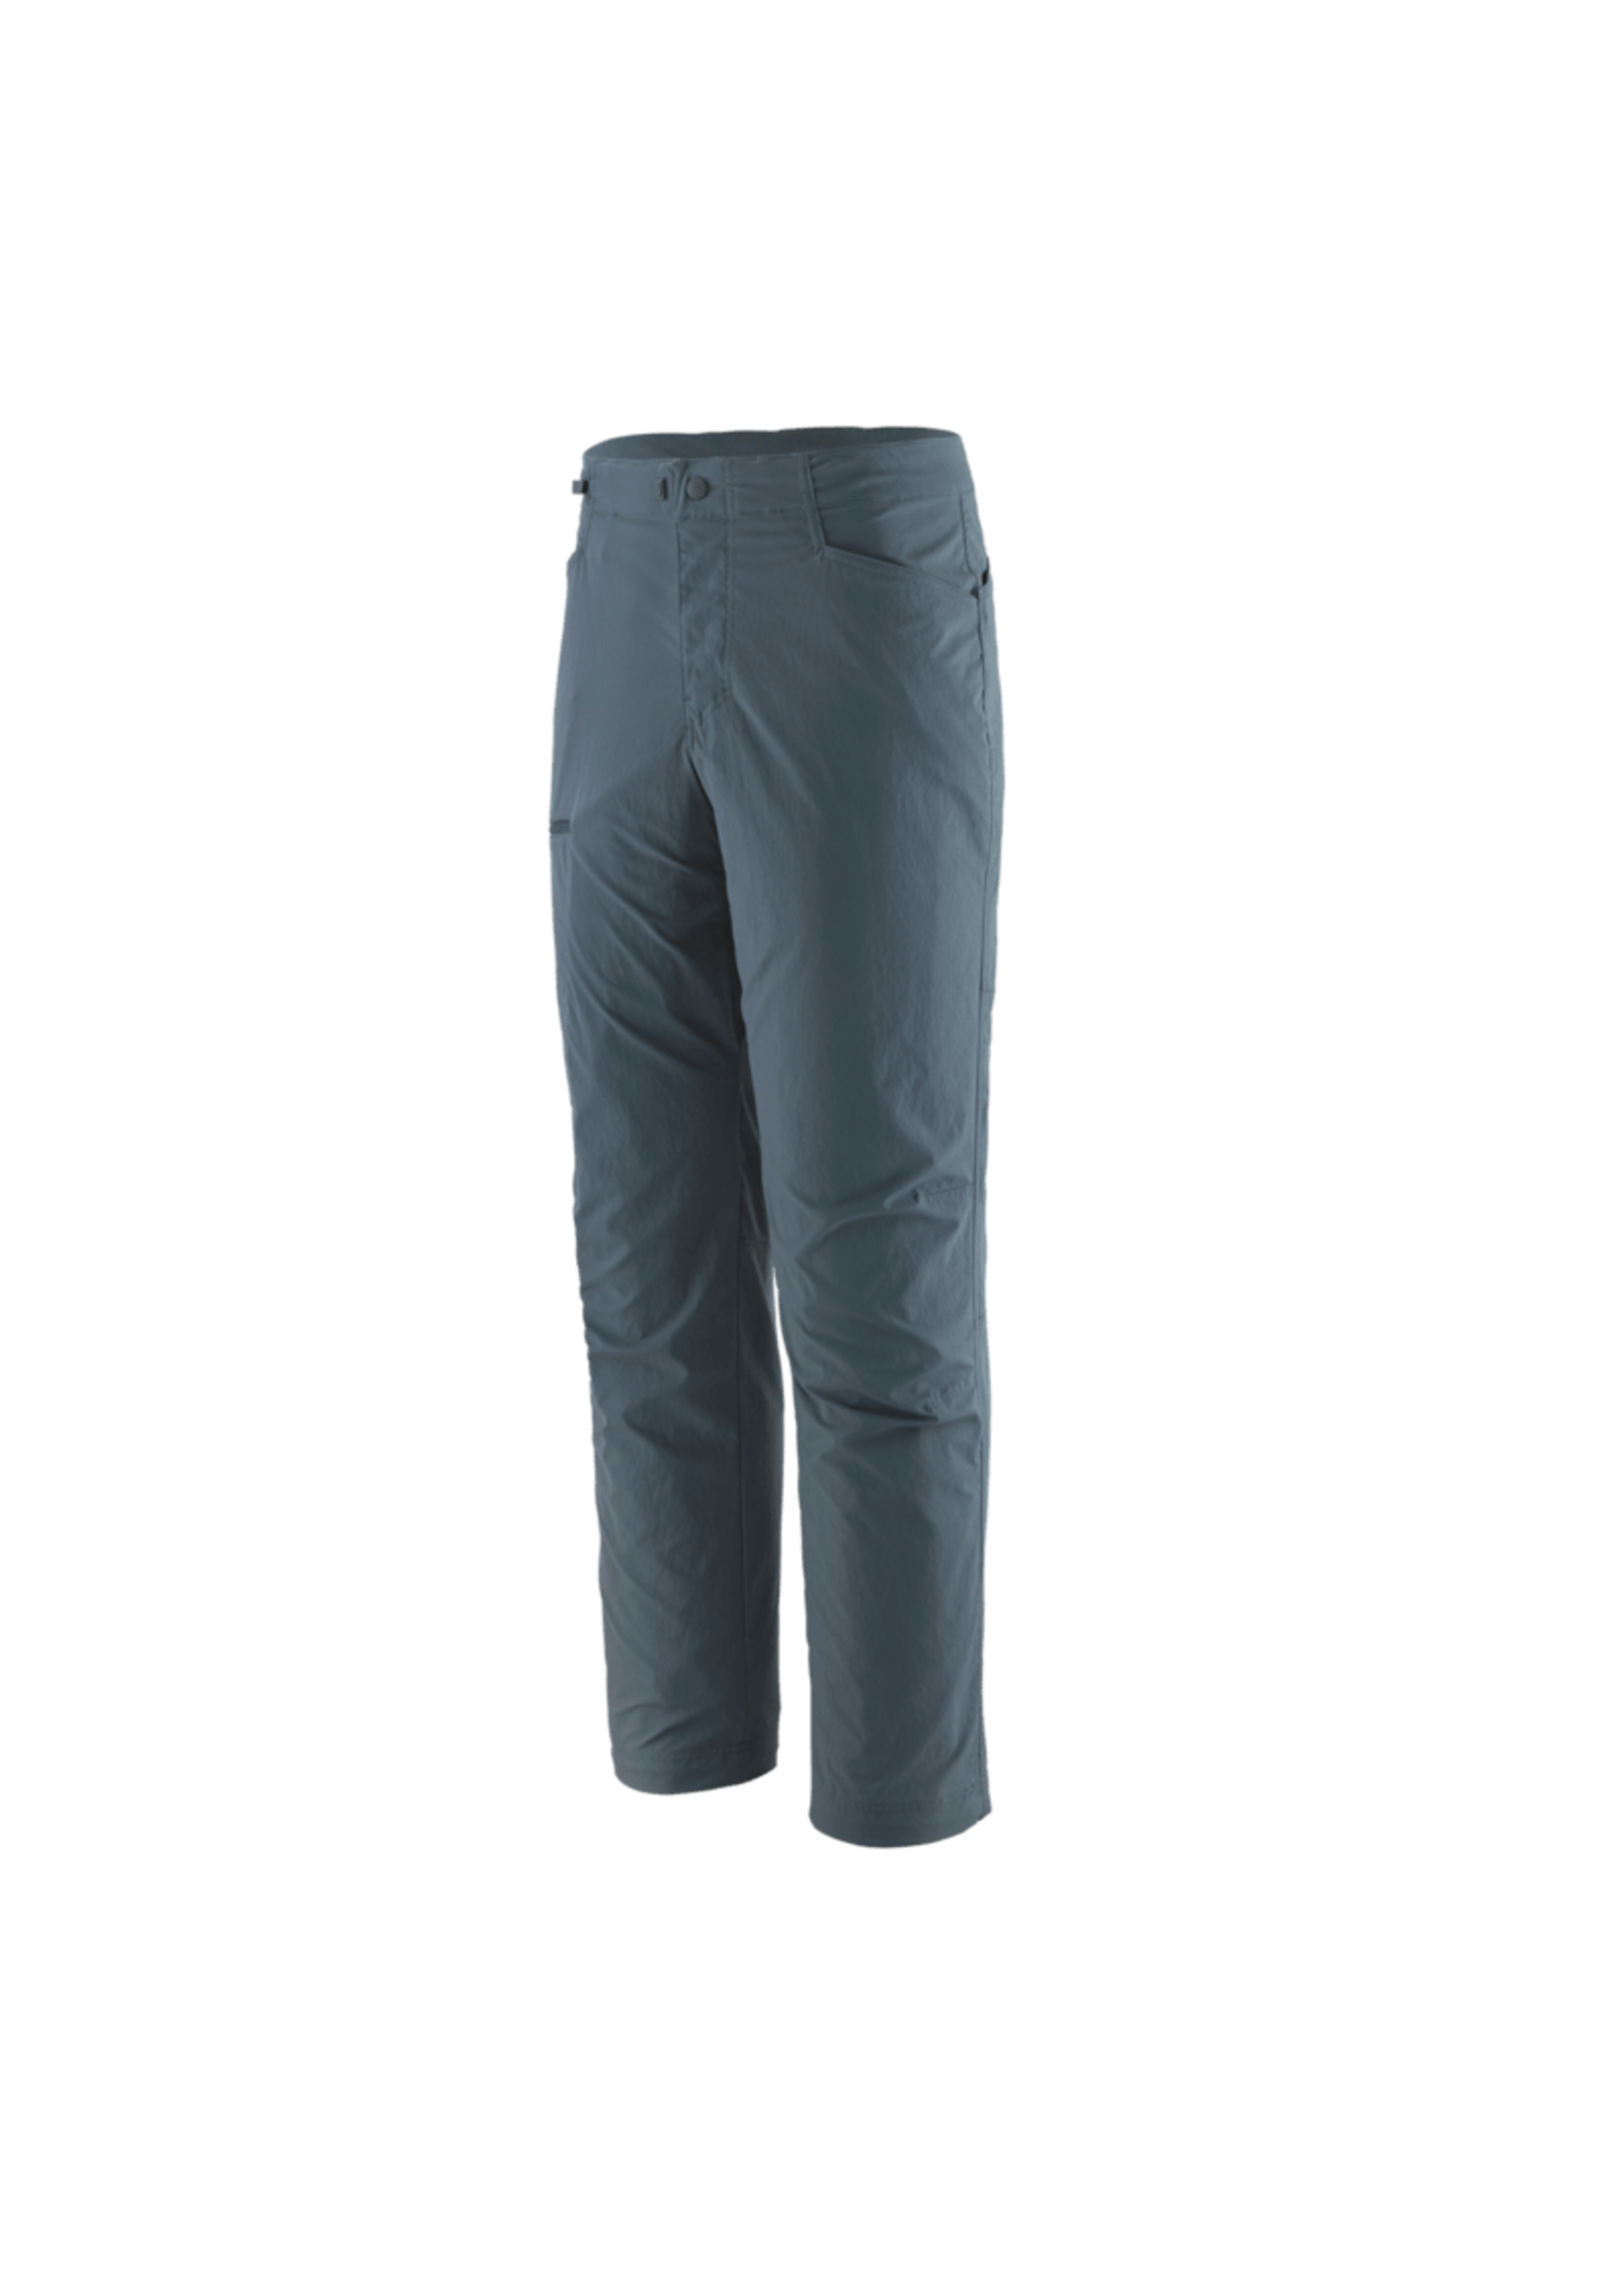 Patagonia Men's RPS Rock Pants - Short - Plume Grey